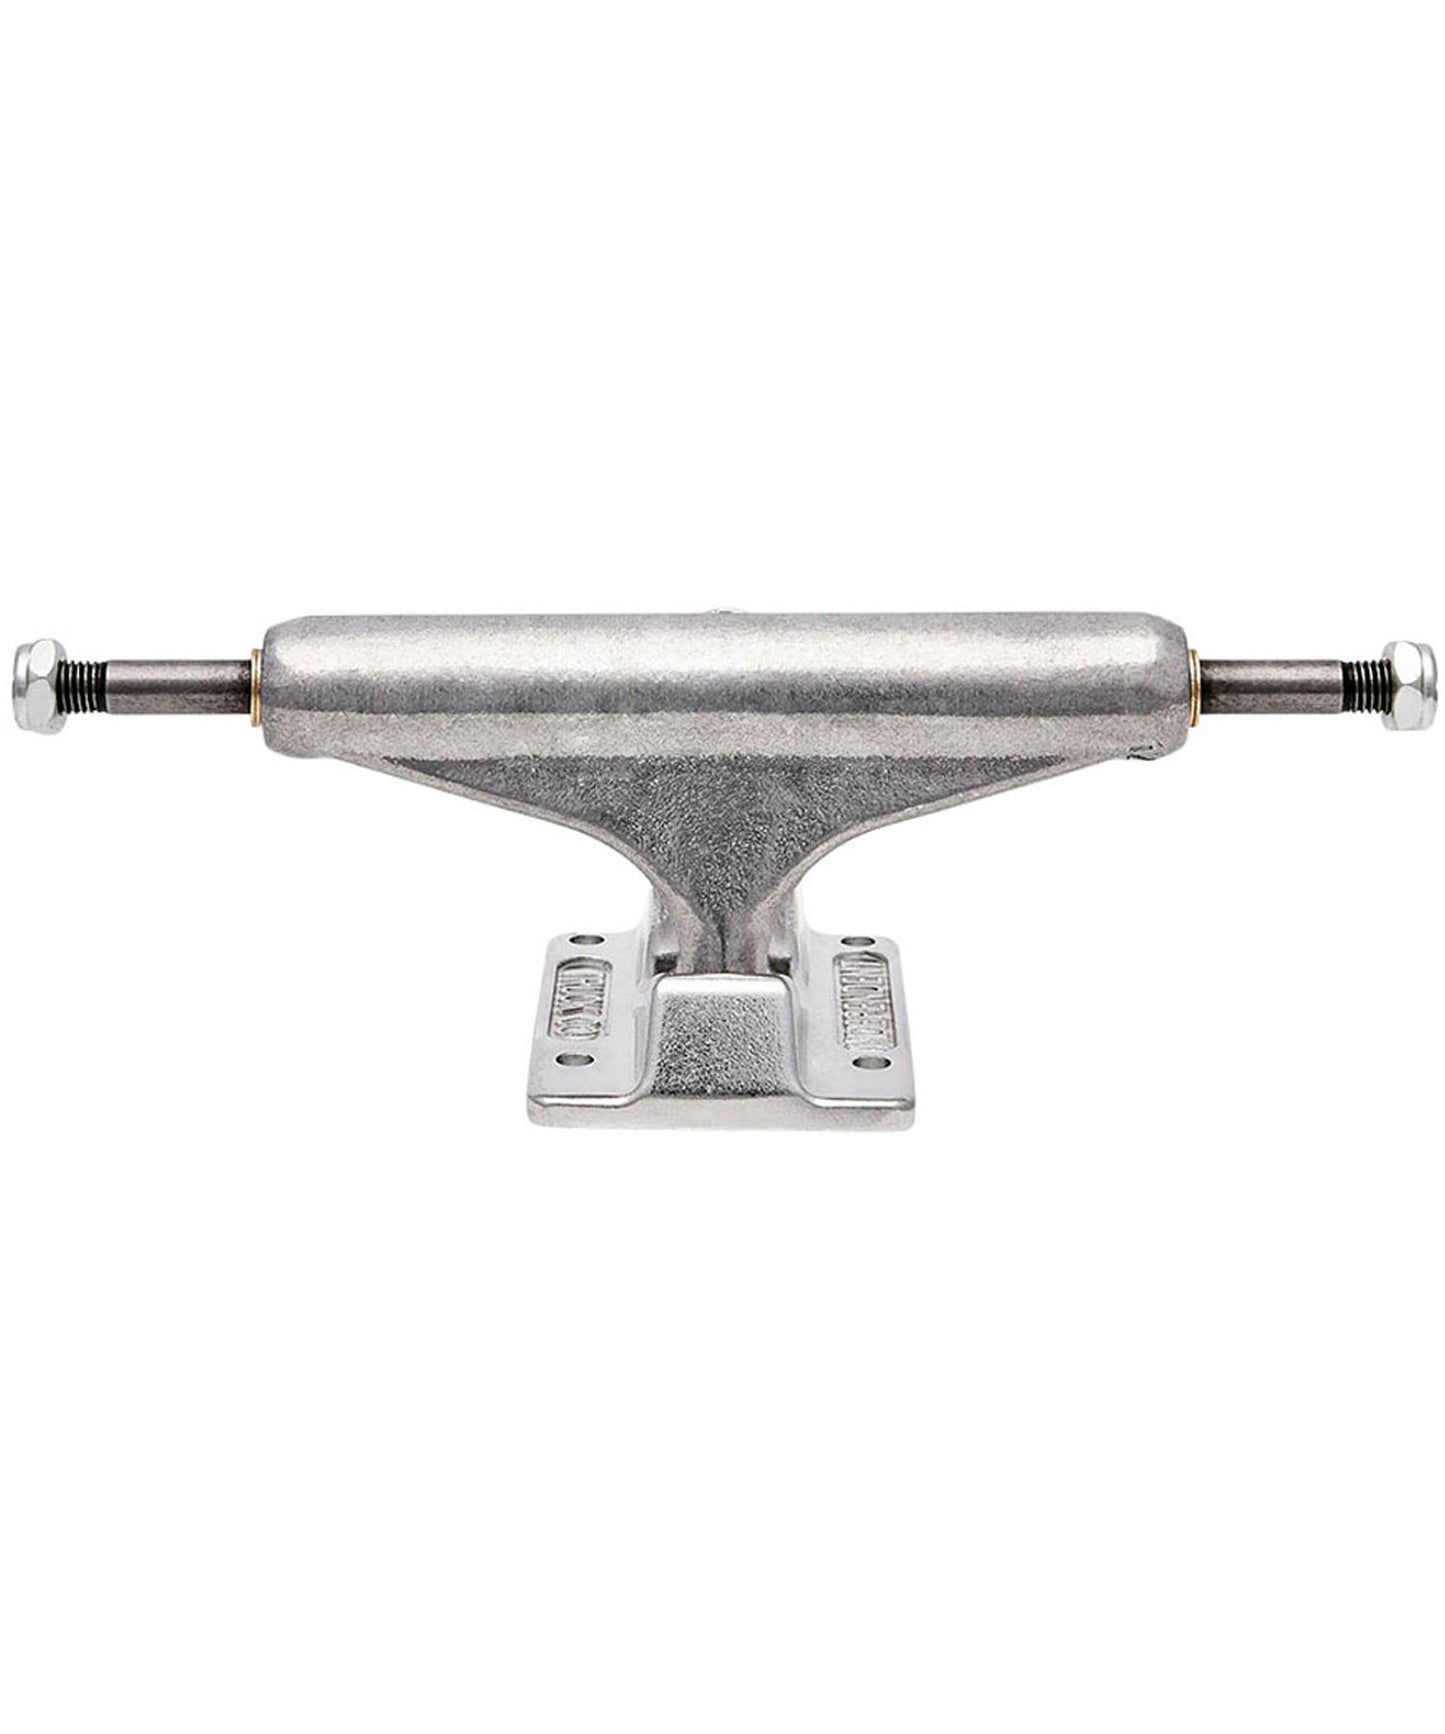 independent-Hollow-Silver-standard-159mm-ejes de calidad-para skate-hanger y placa base de aluminio-duraderos-independent-marca reputada en ejes.